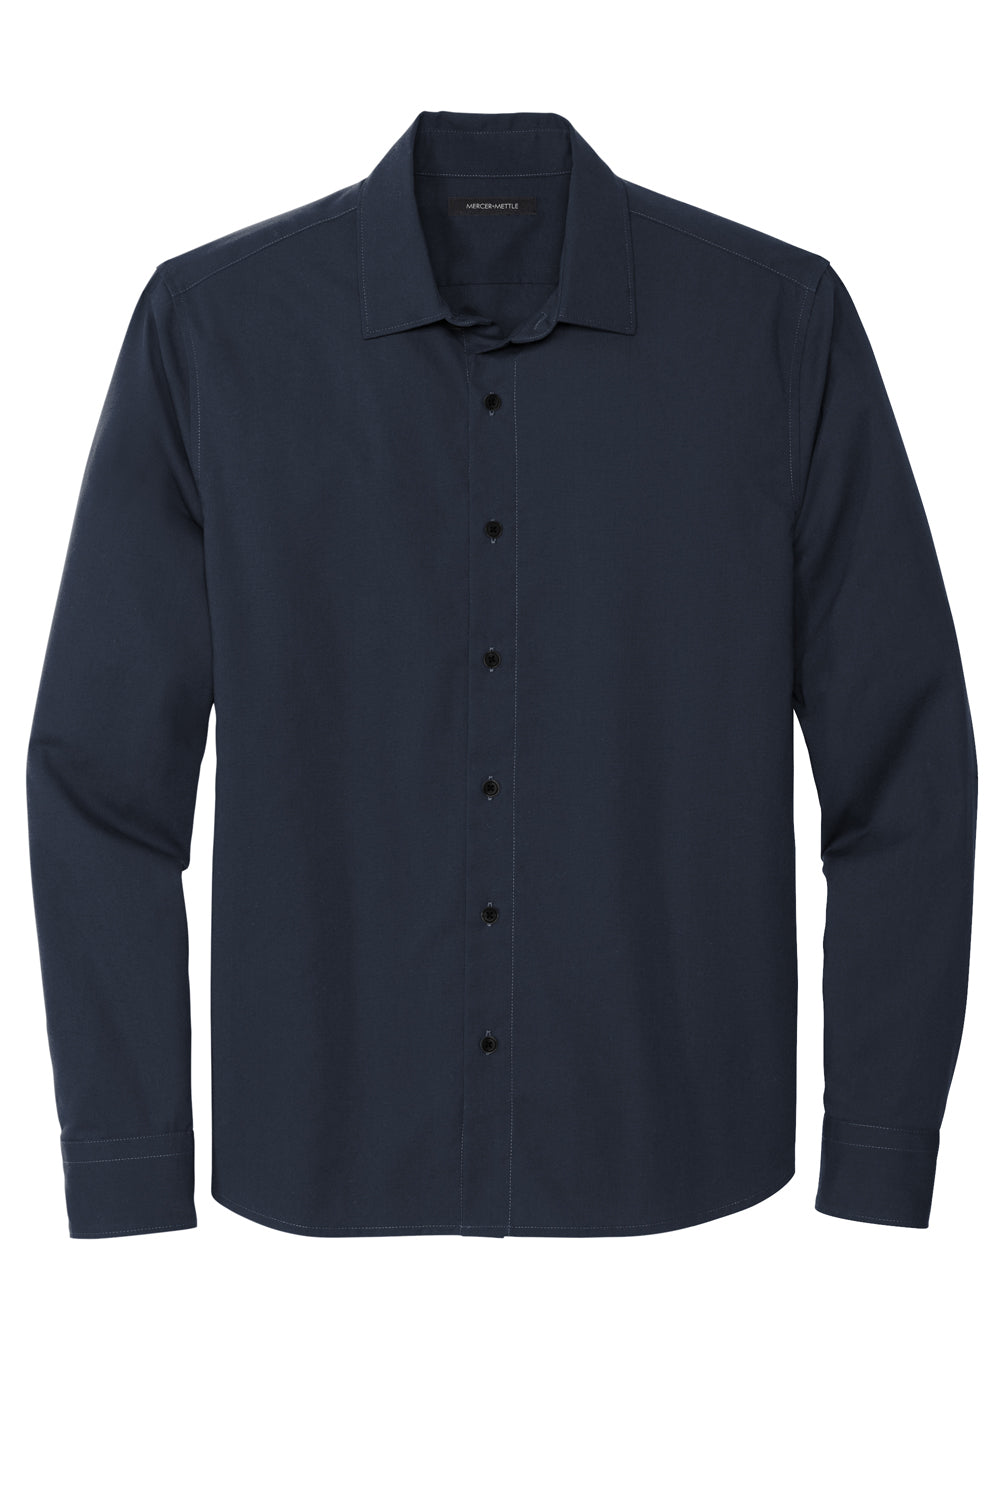 Mercer+Mettle MM2000 Stretch Woven Long Sleeve Button Down Shirt Night Navy Blue Flat Front